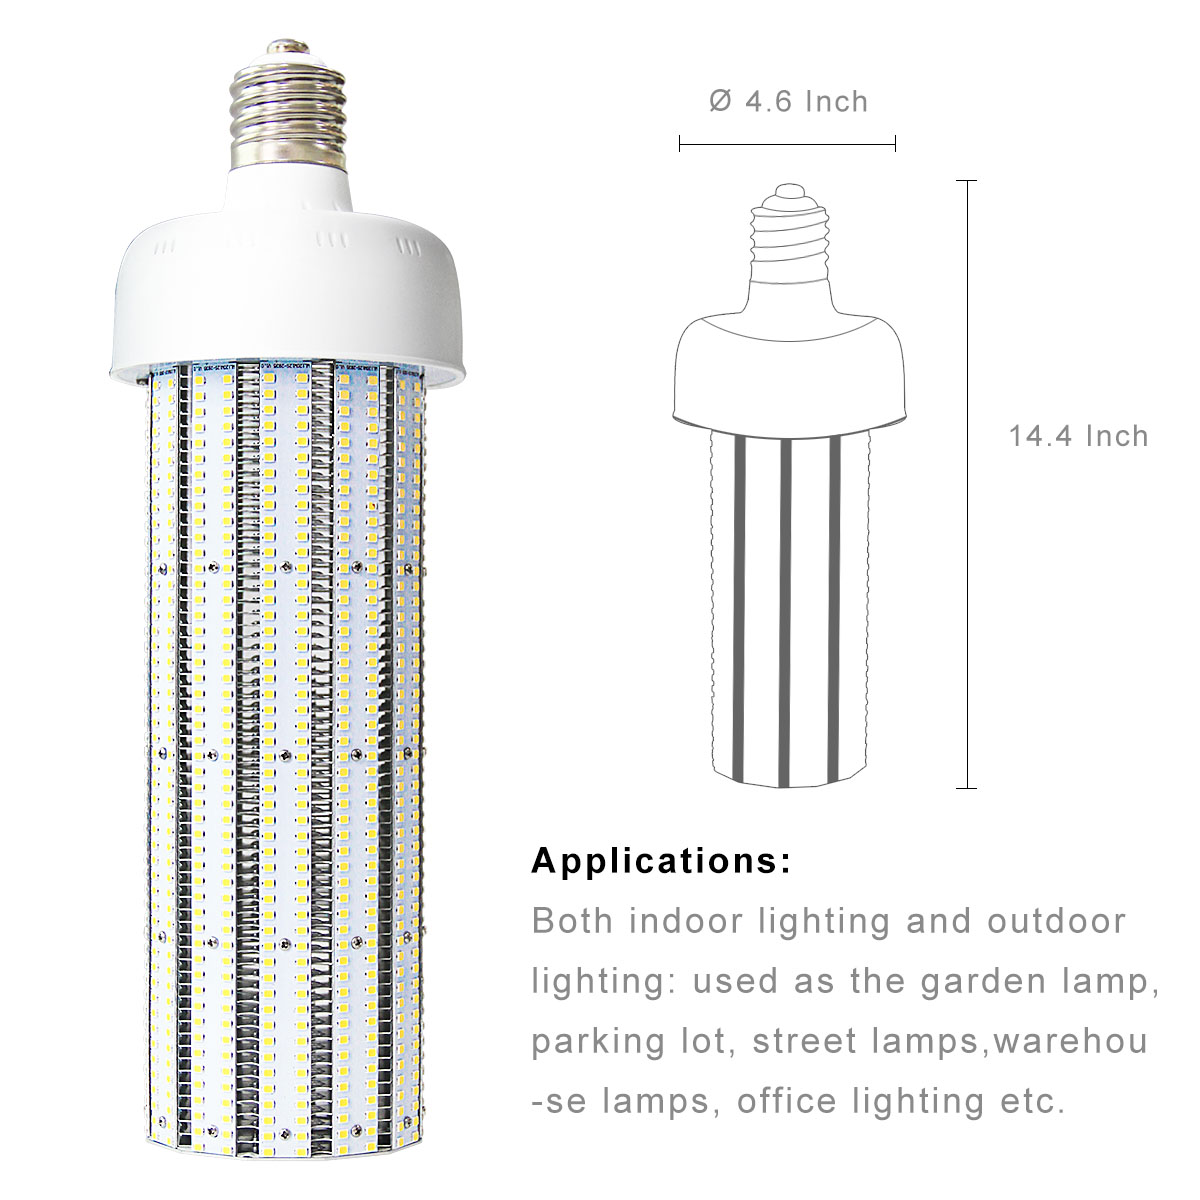 KAWELL 120W LED Corn Light Bulb E39 Large Mogul Base LED Street/Area Light Bulb for Fixtures HID/HPS/Metal Halide or CFL, 14400 lumen 5000K (Crystal White Glow) UL Listed TUV-Qualified DLC Certified 